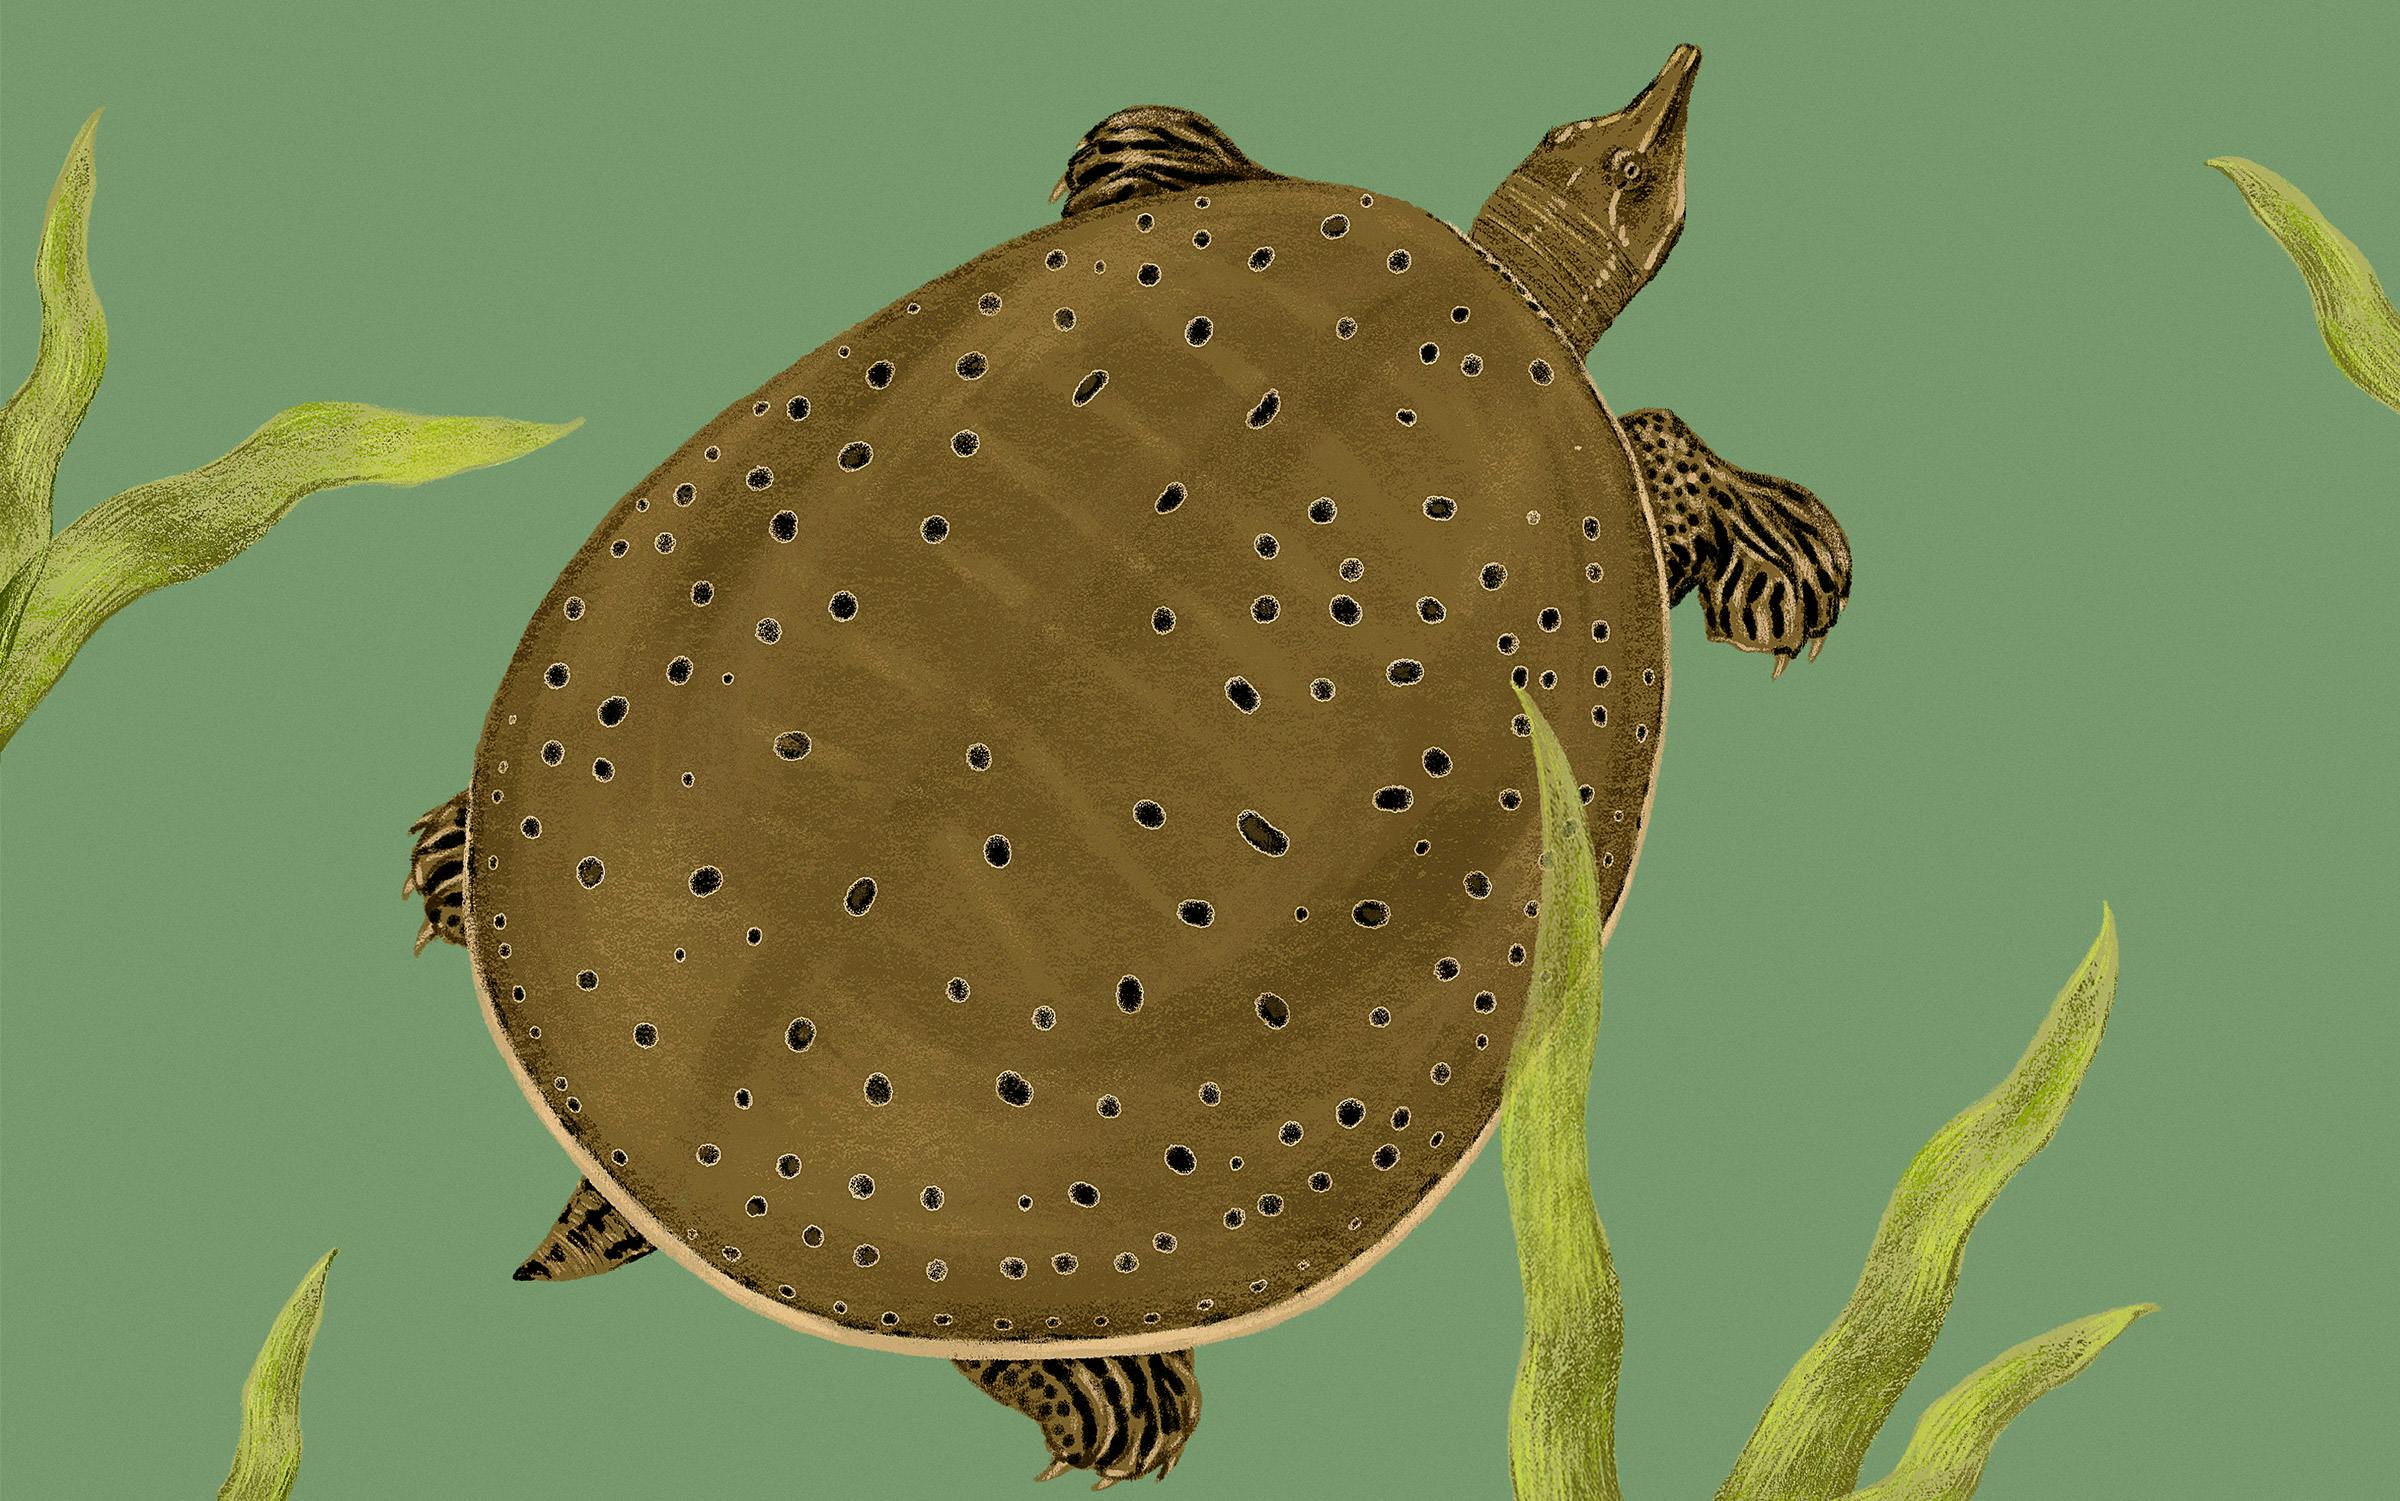 Meet Texas's Strangest Turtle